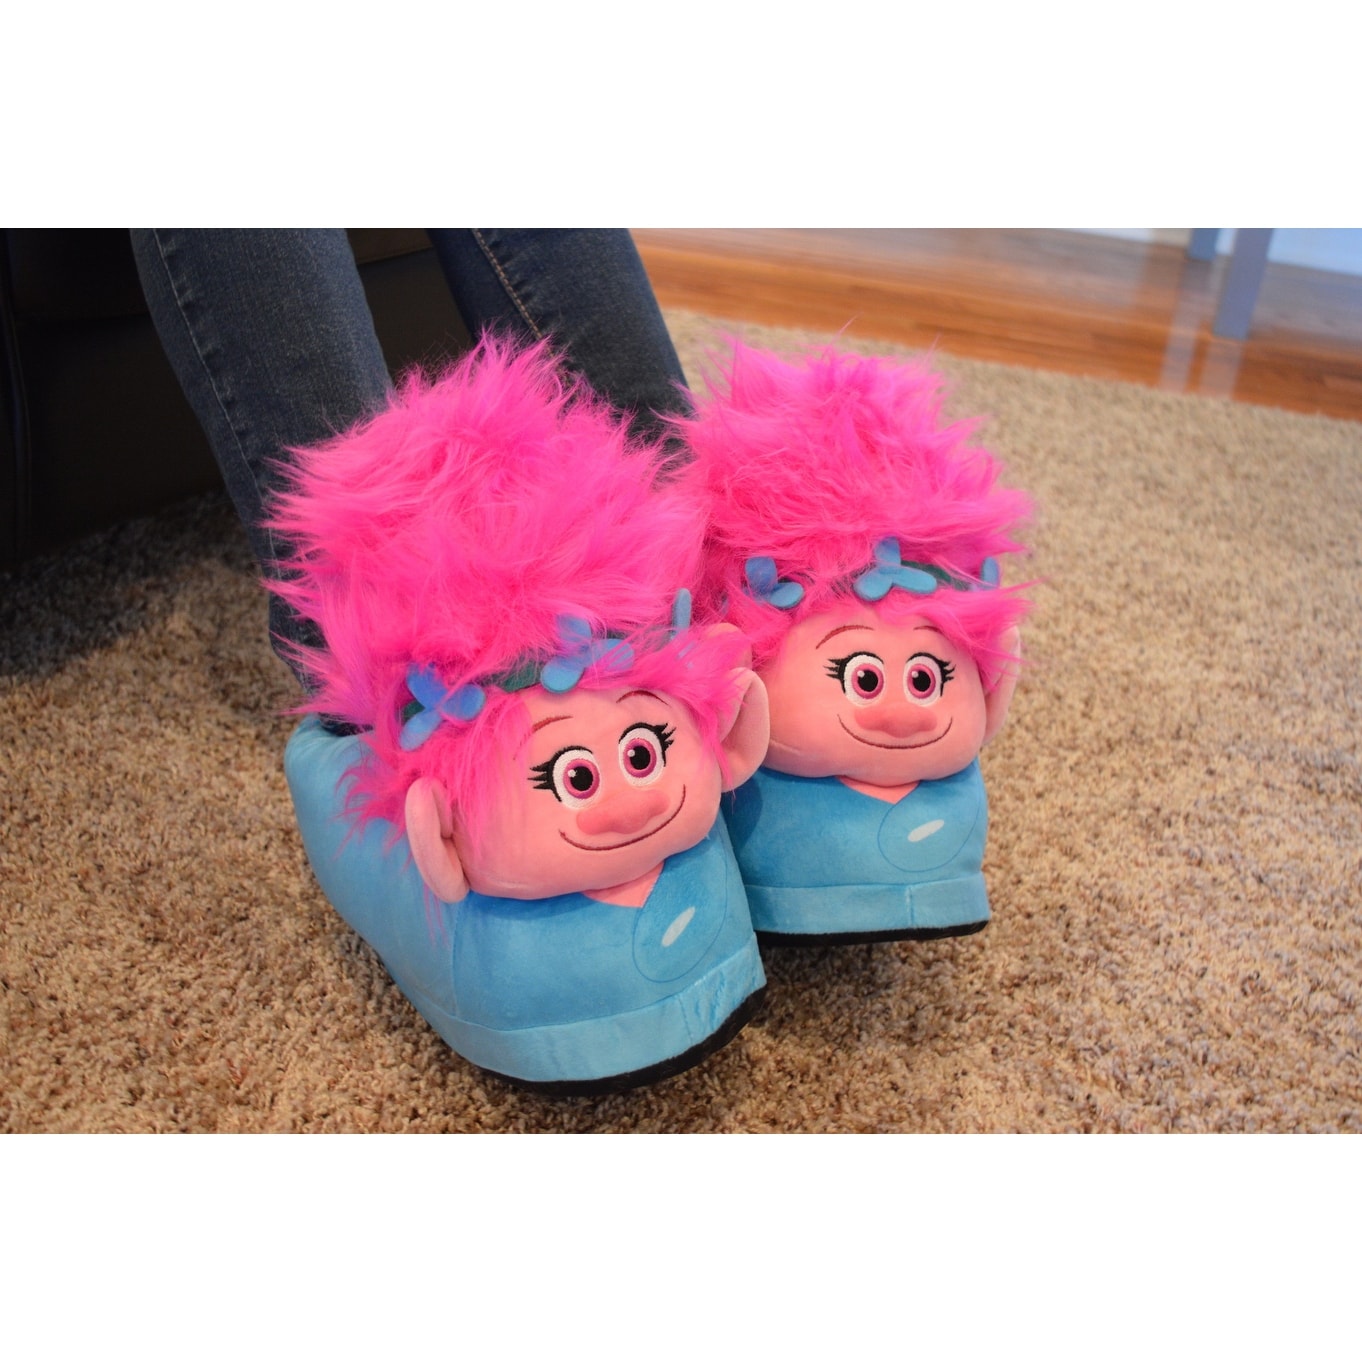 trolls slippers